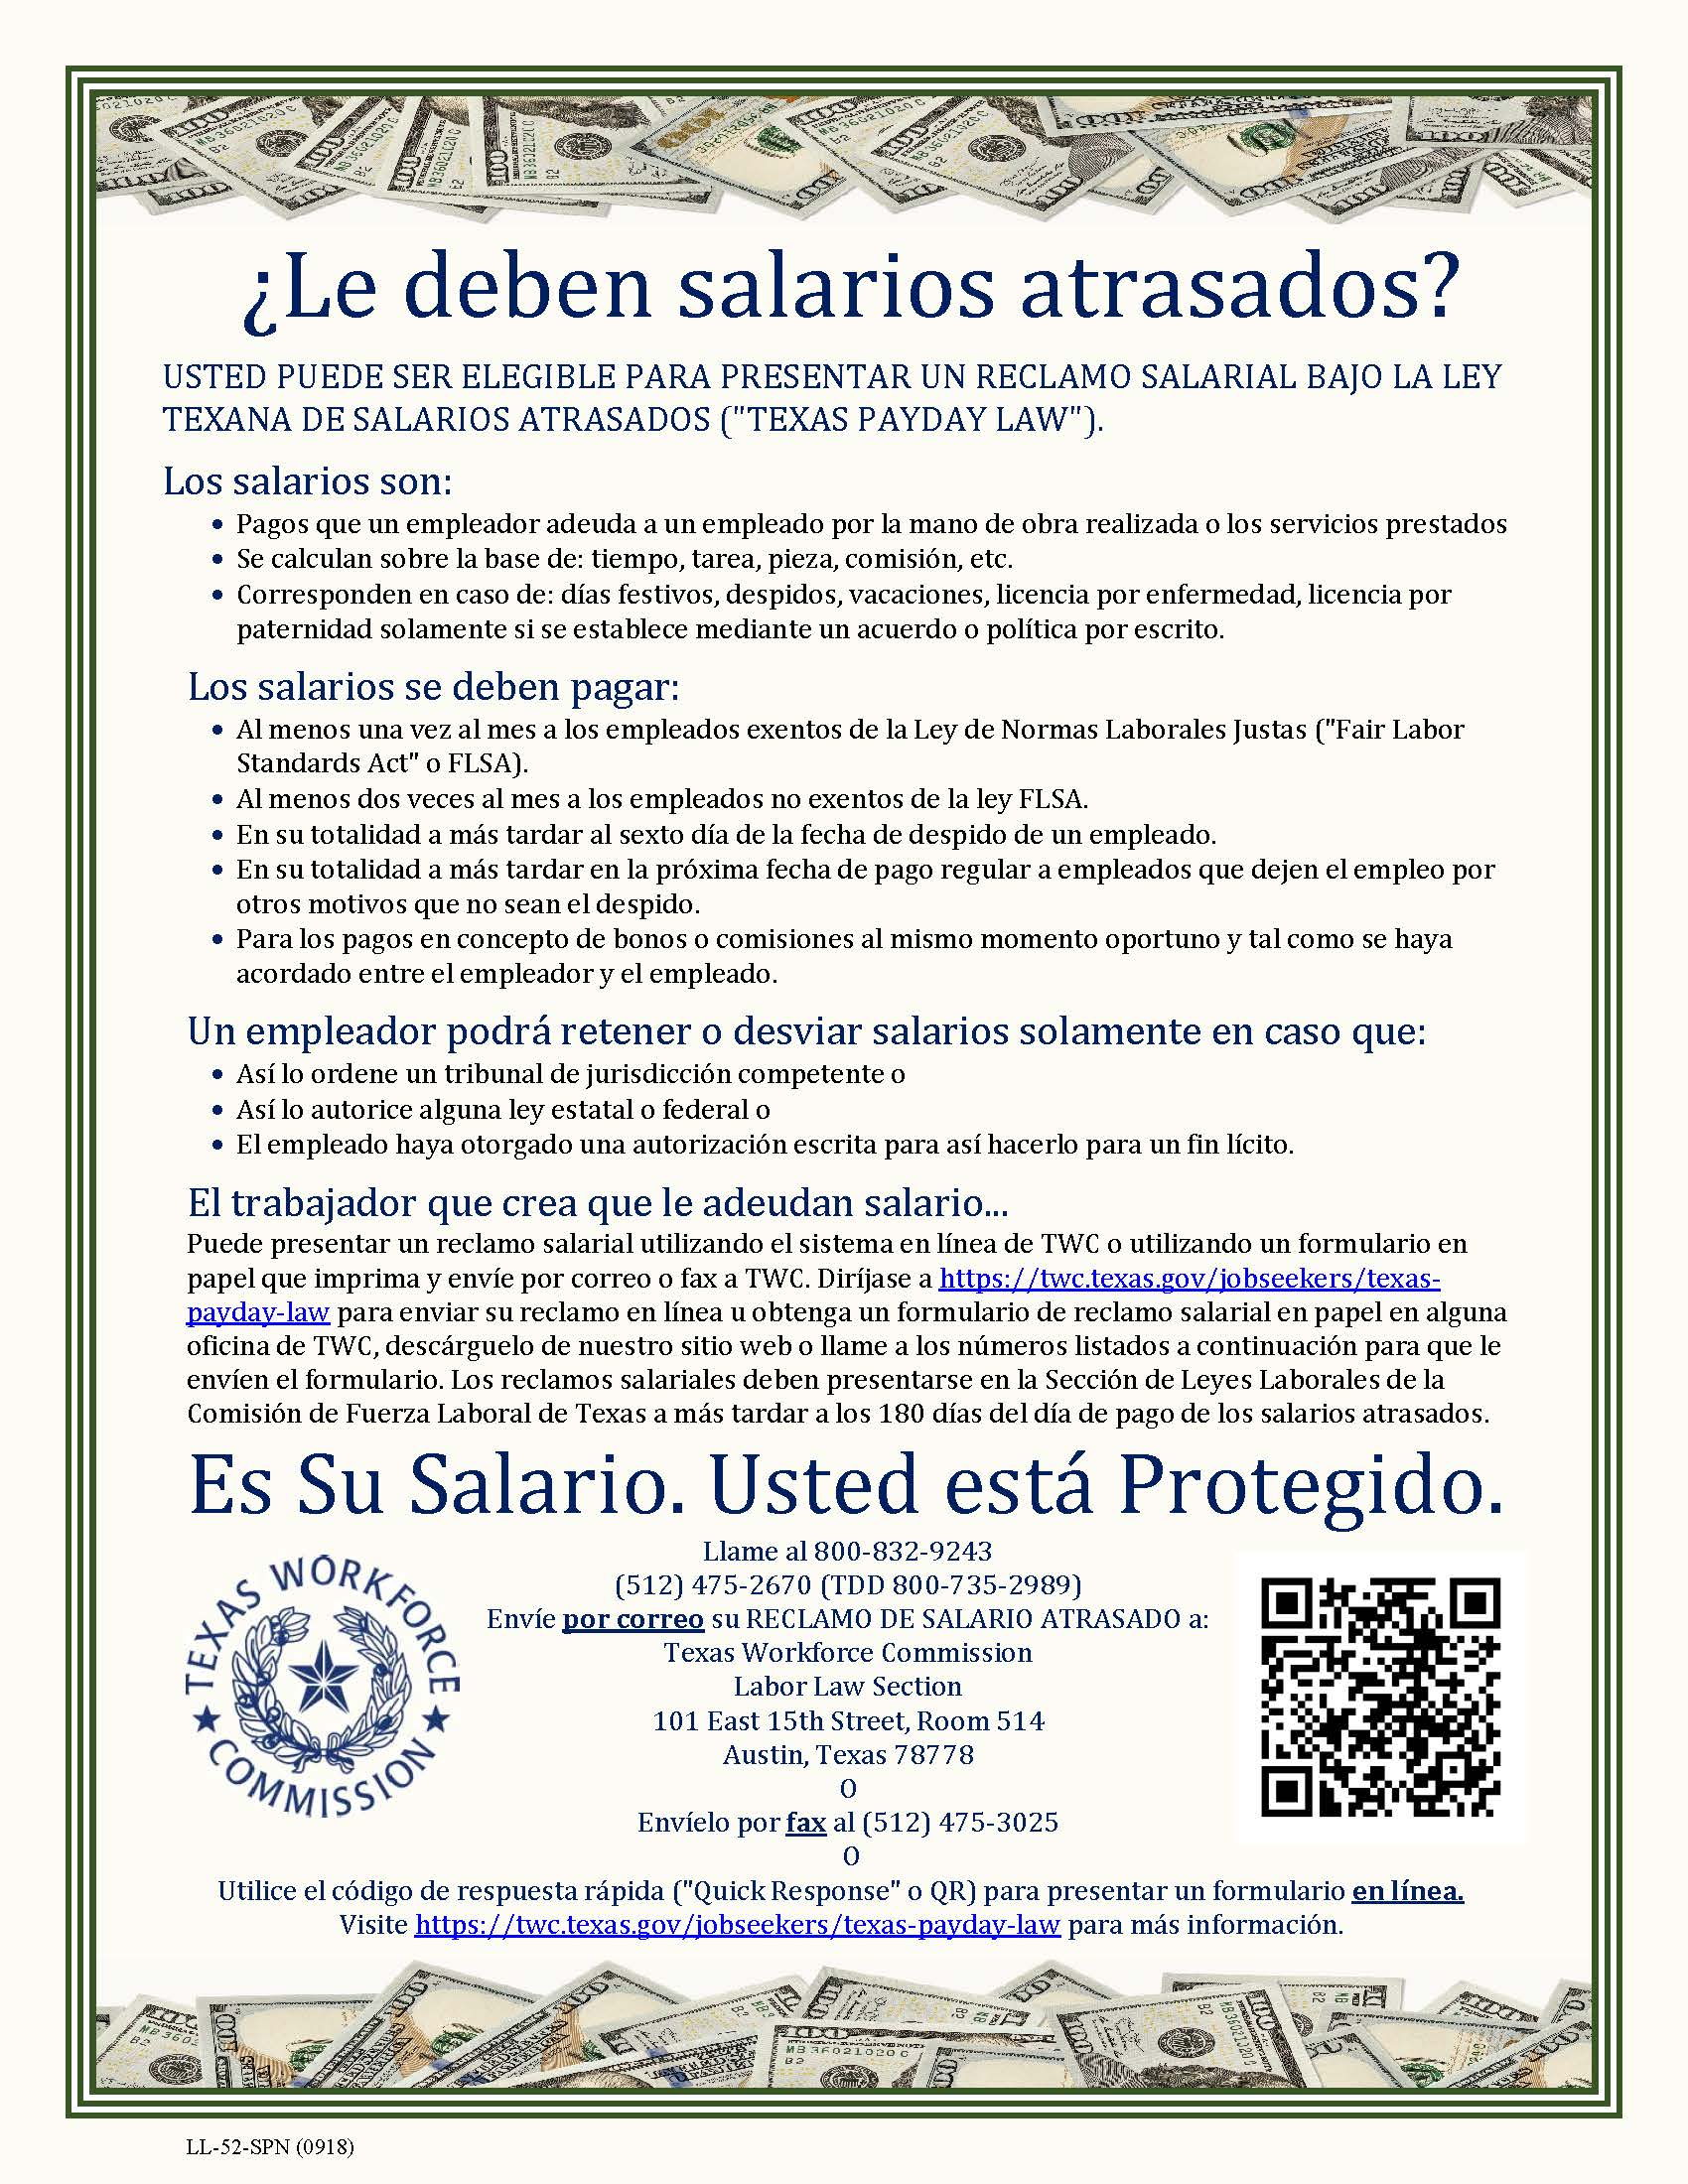 Wage Claim Notification - Spanish.jpg